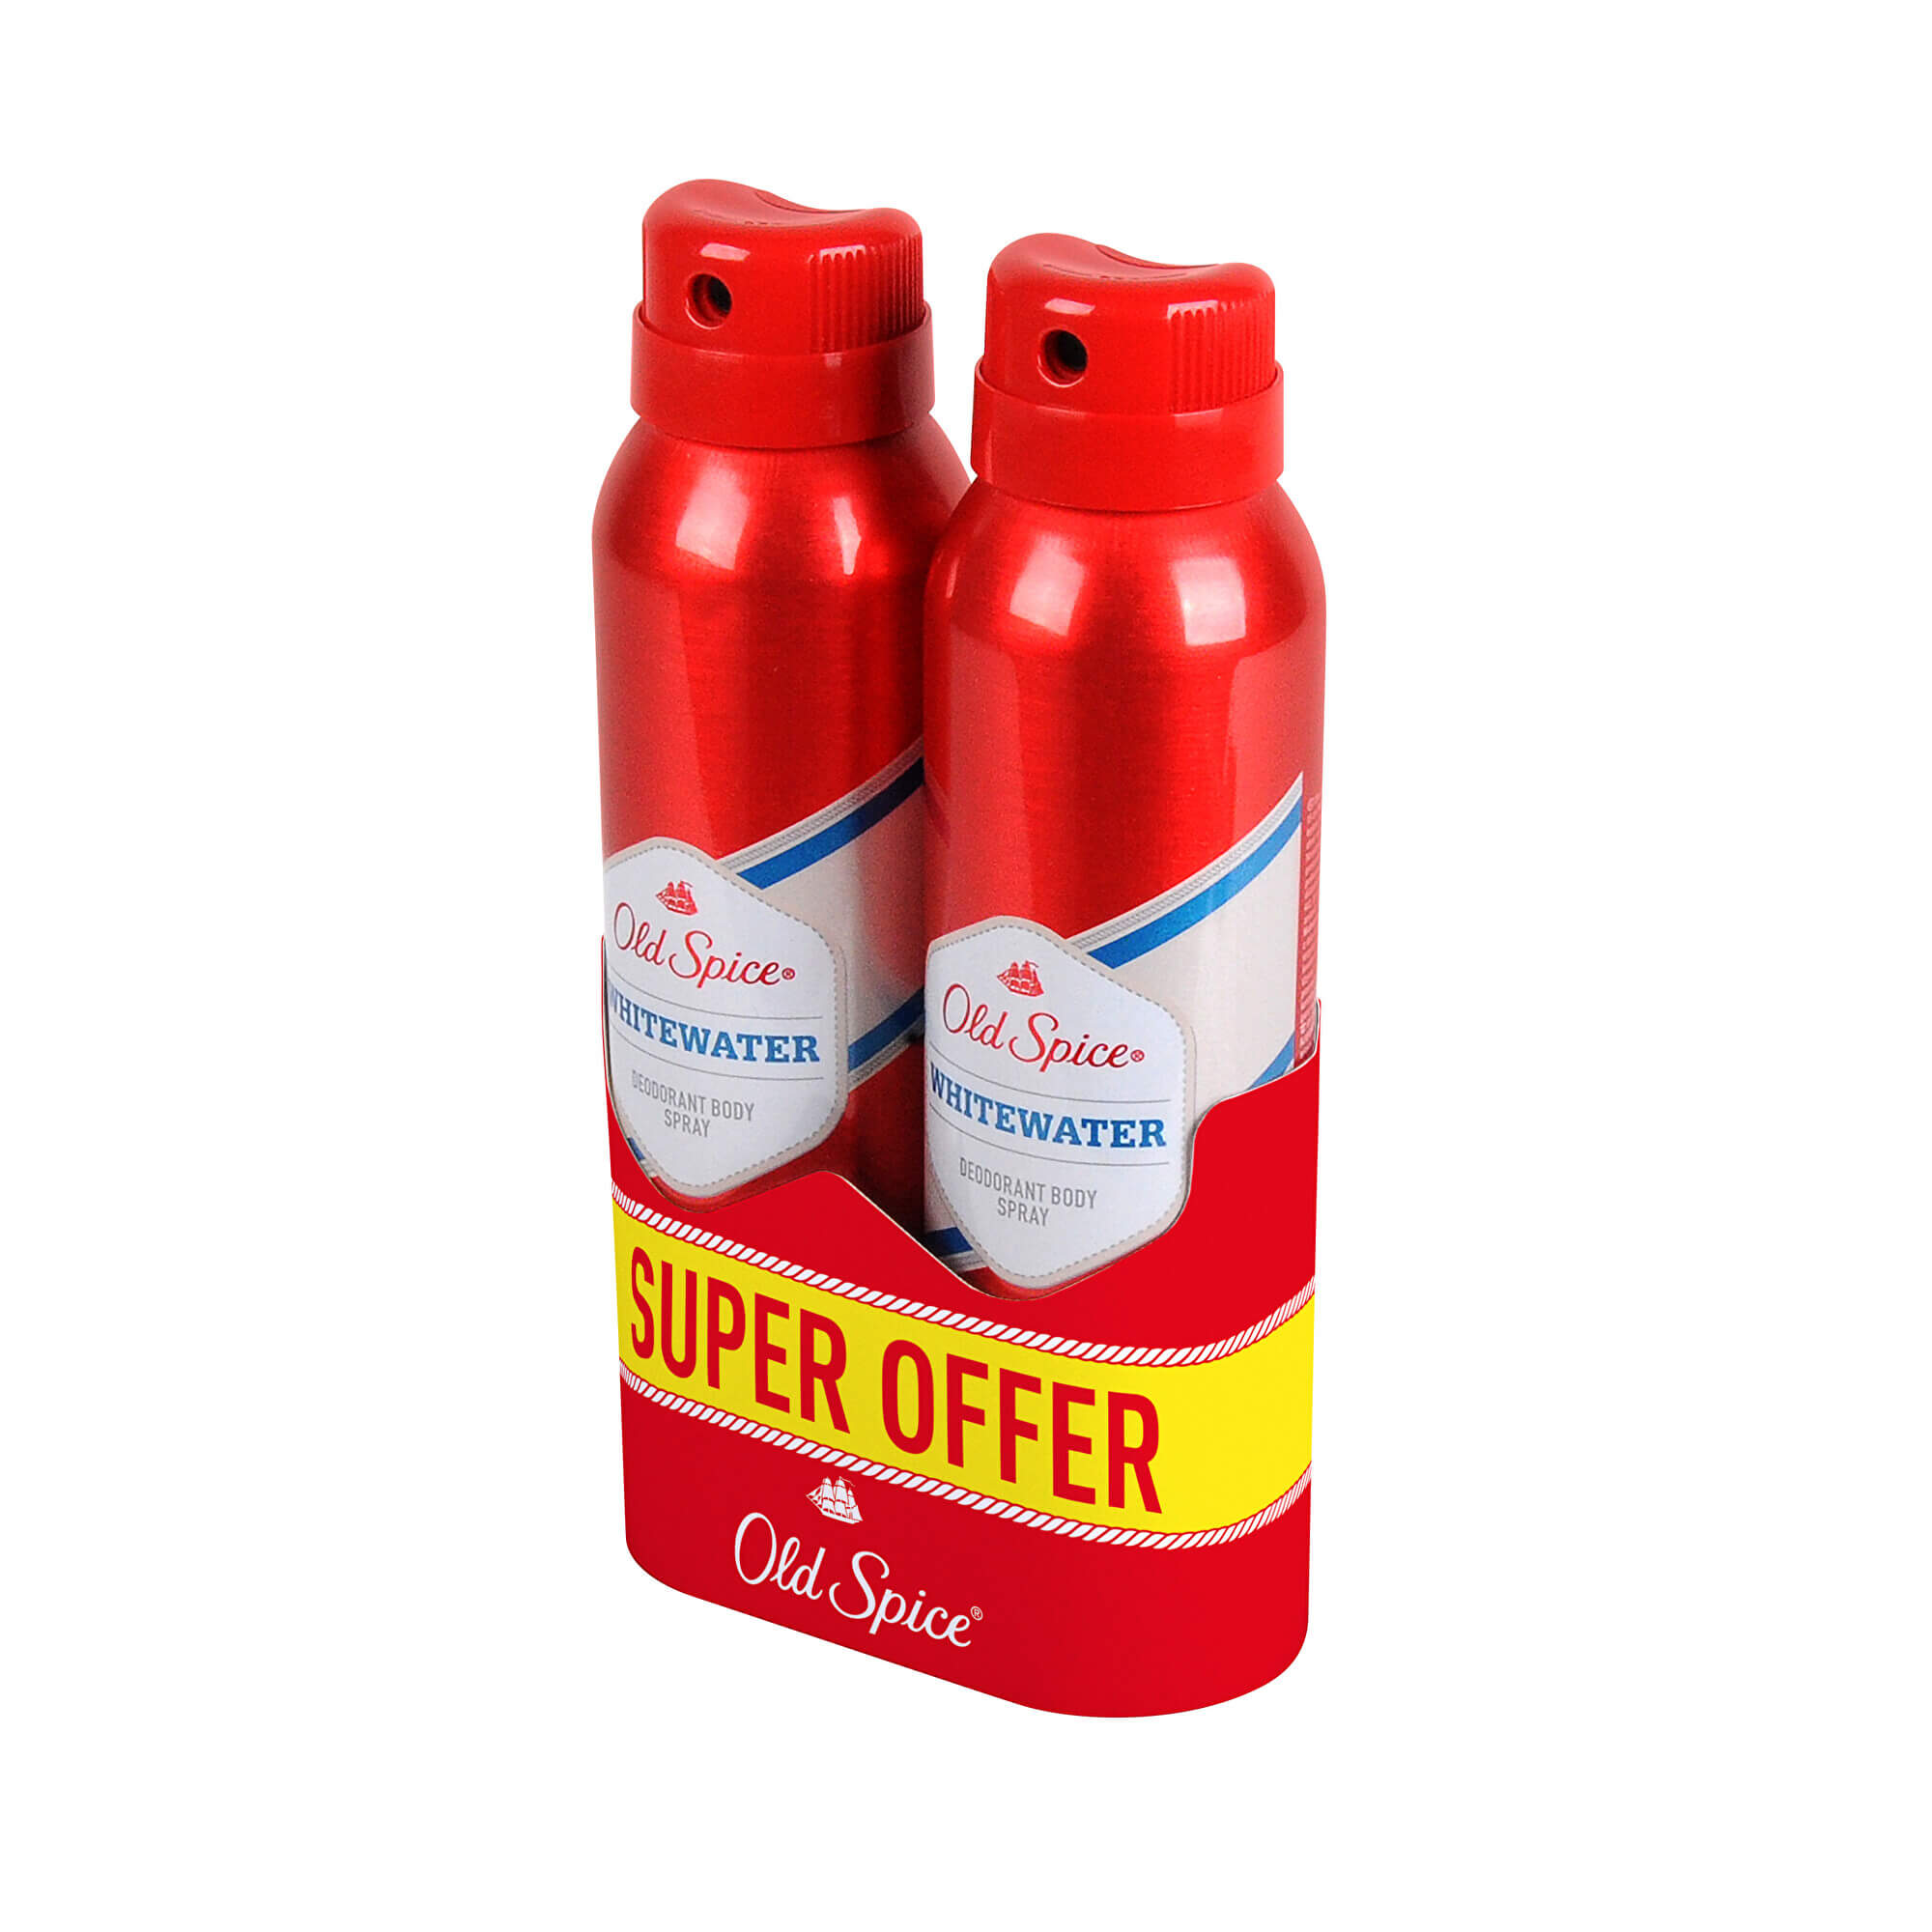 Old Spice Dezodorant v spreji Whitewater Duo 2 x 150 ml + 2 mesiace na vrátenie tovaru